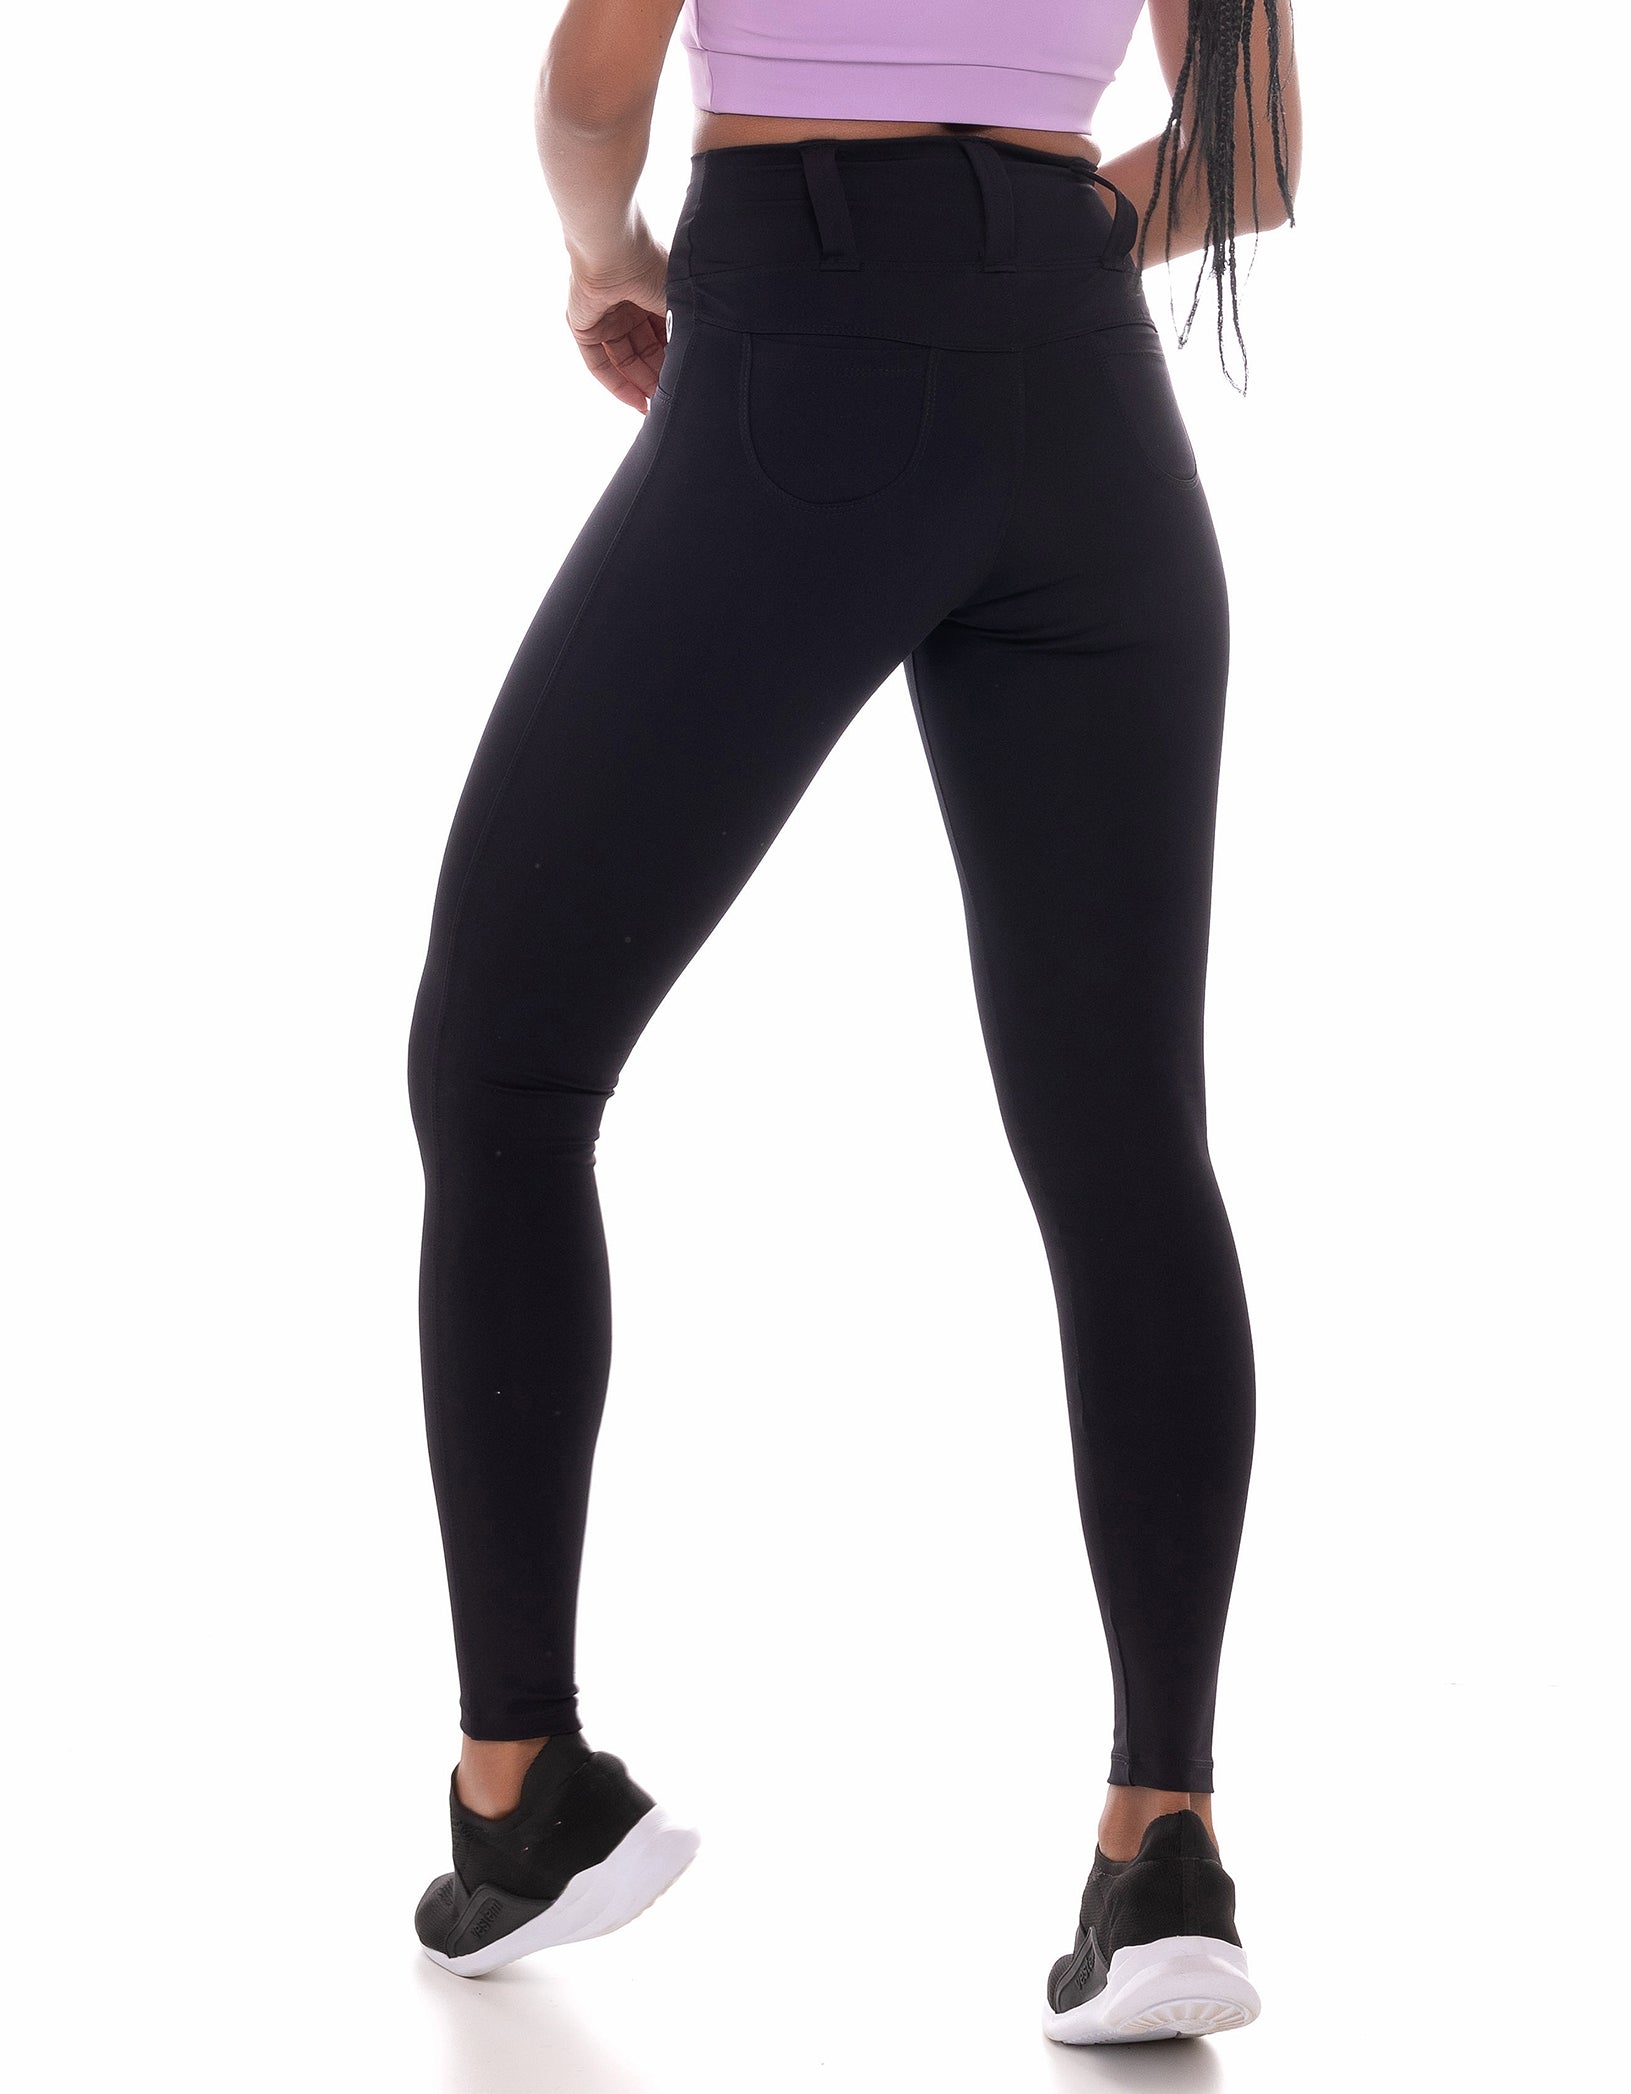 Vestem - Black Ocean leggings leggings - FS1081.C0002